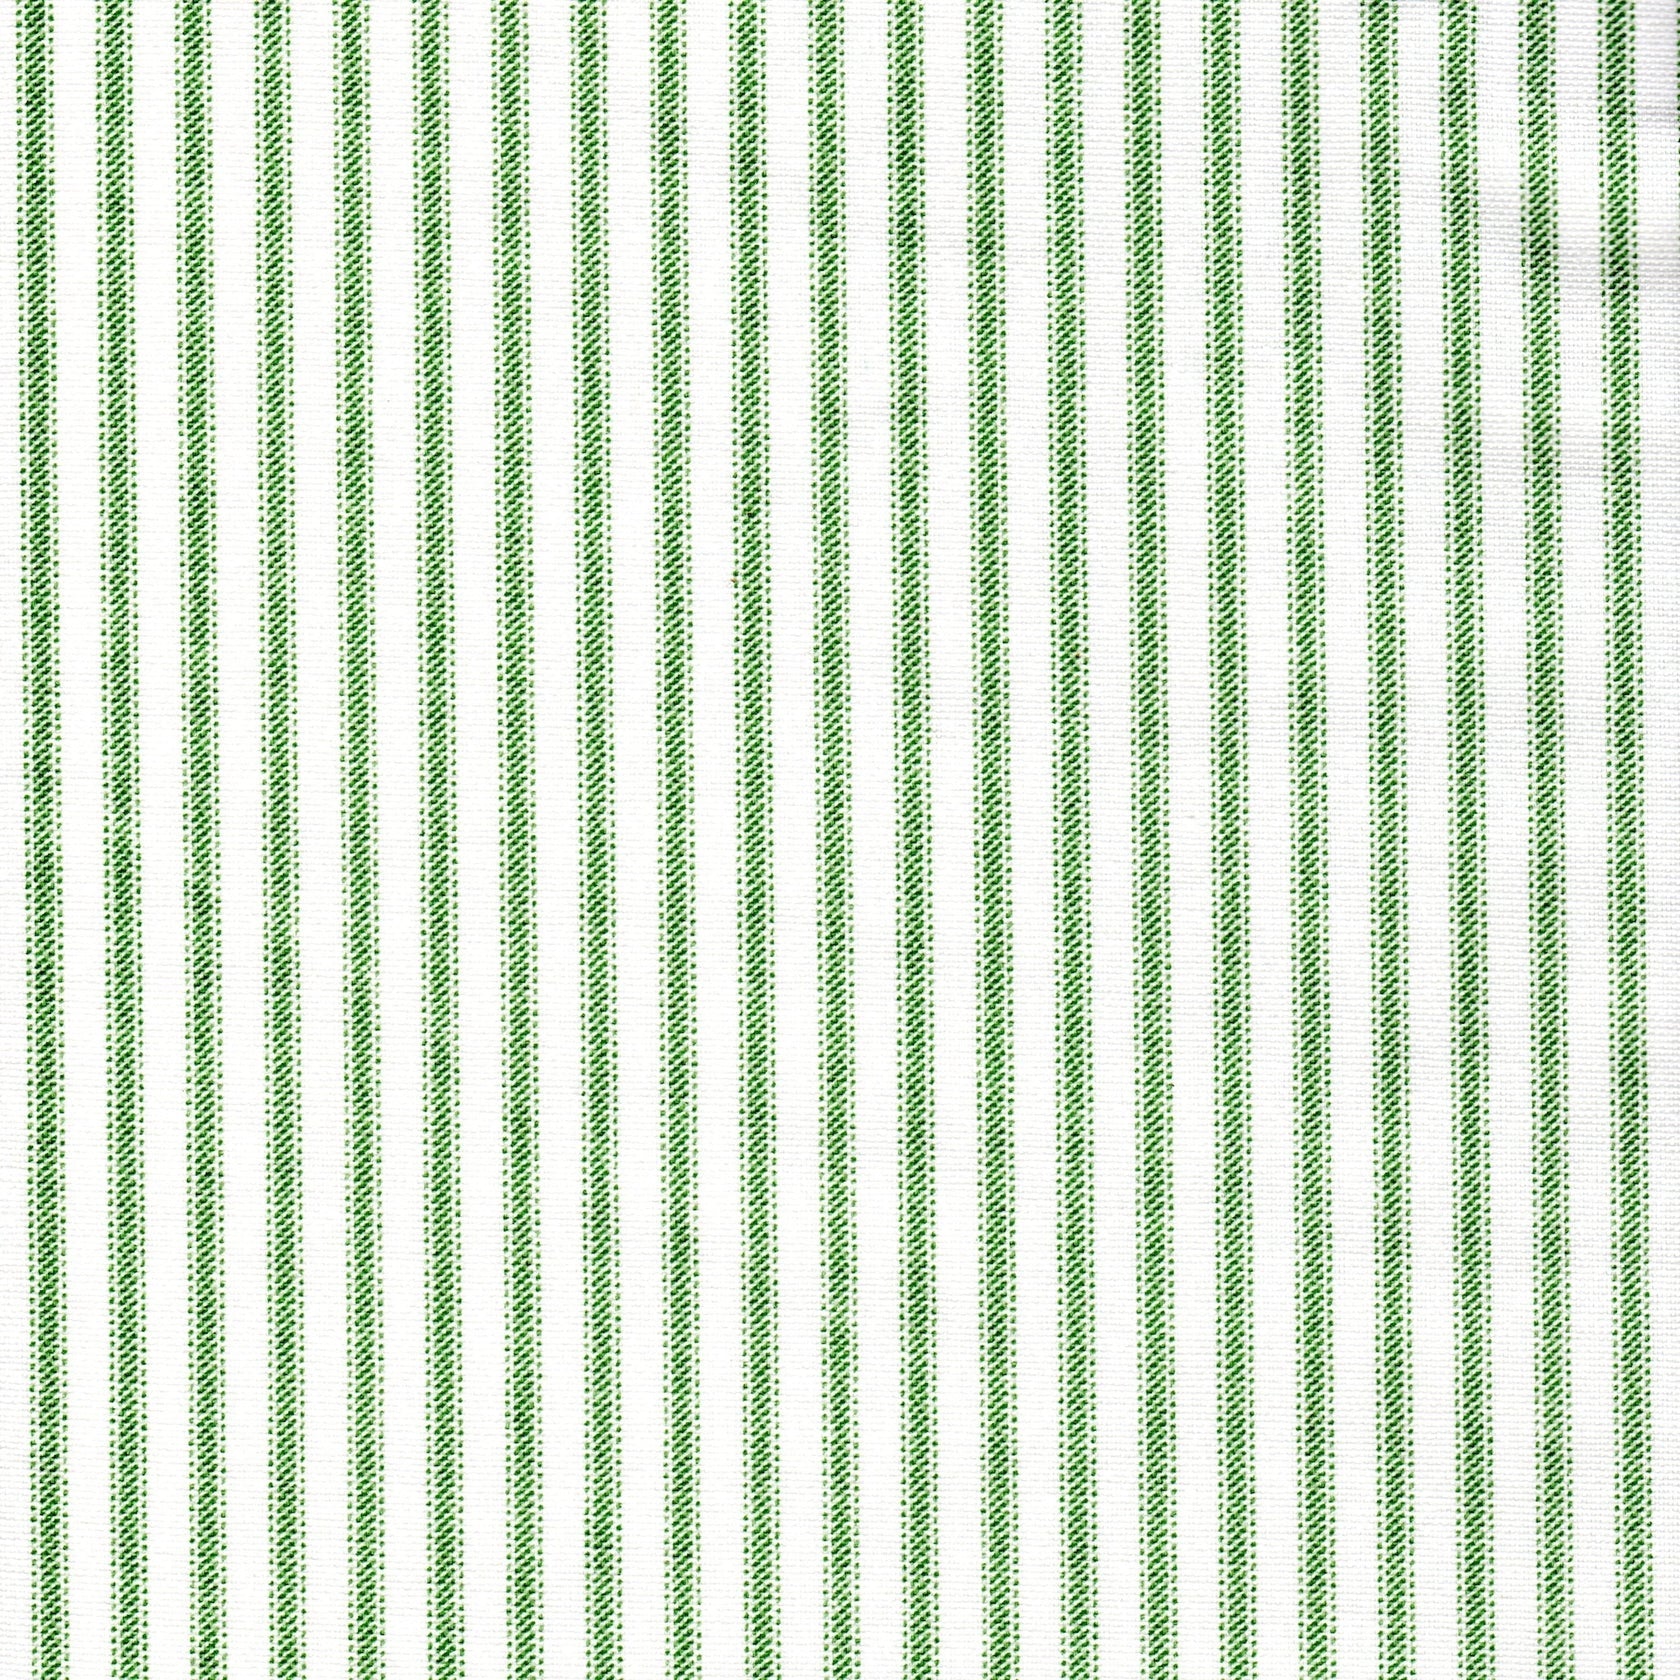 pillow sham in Classic Pine Green Ticking Stripe on White